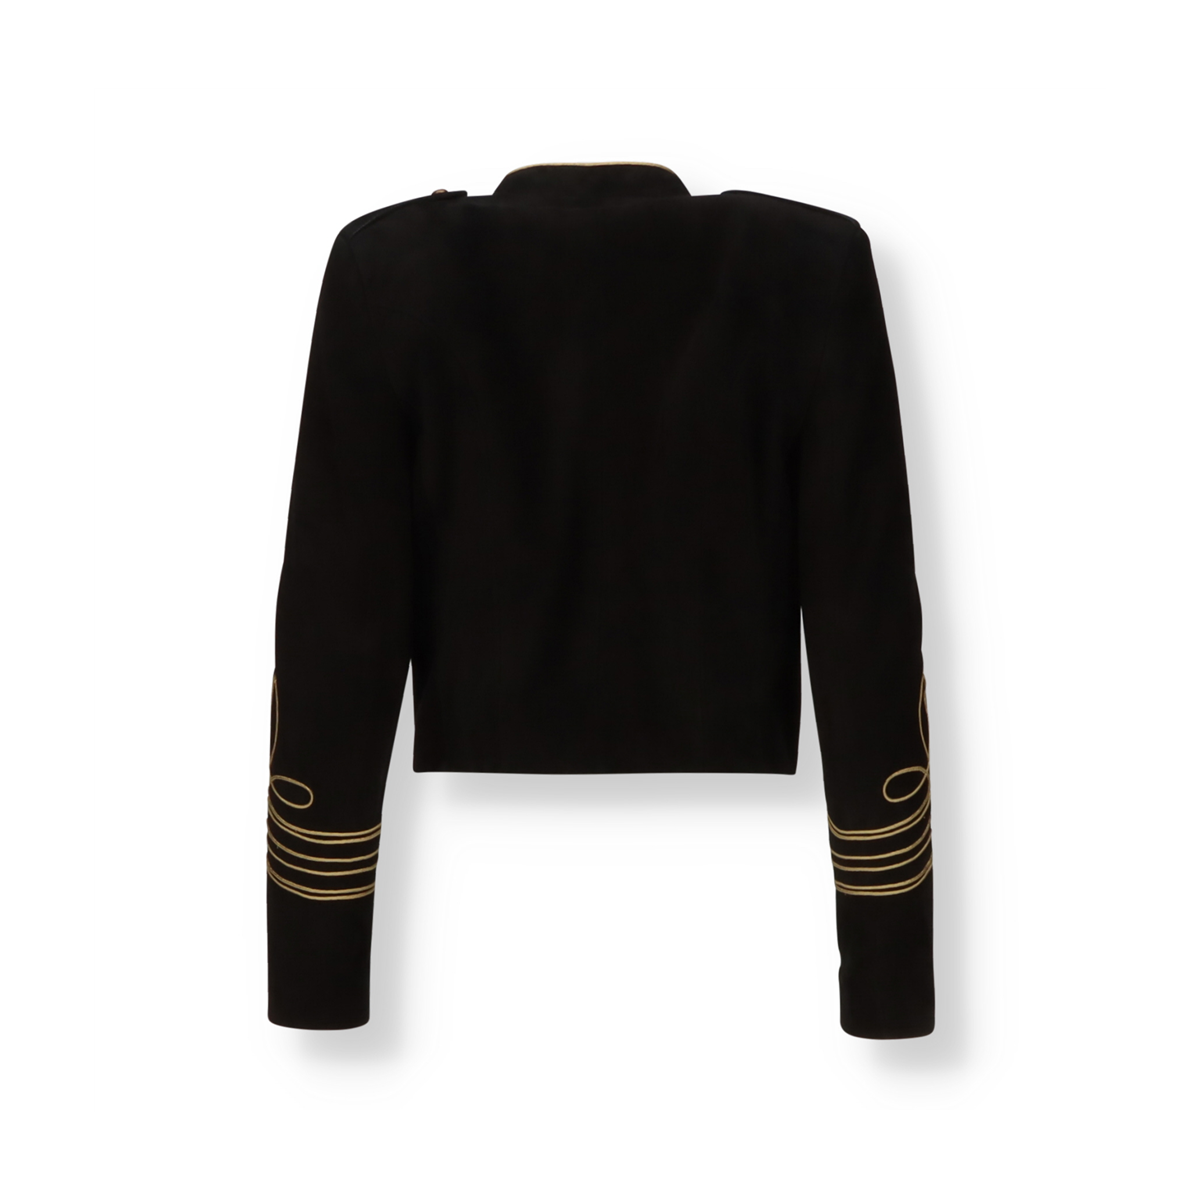 Stylish Saint Laurent SS15 Psych Rock Leather Napoleon Jacket